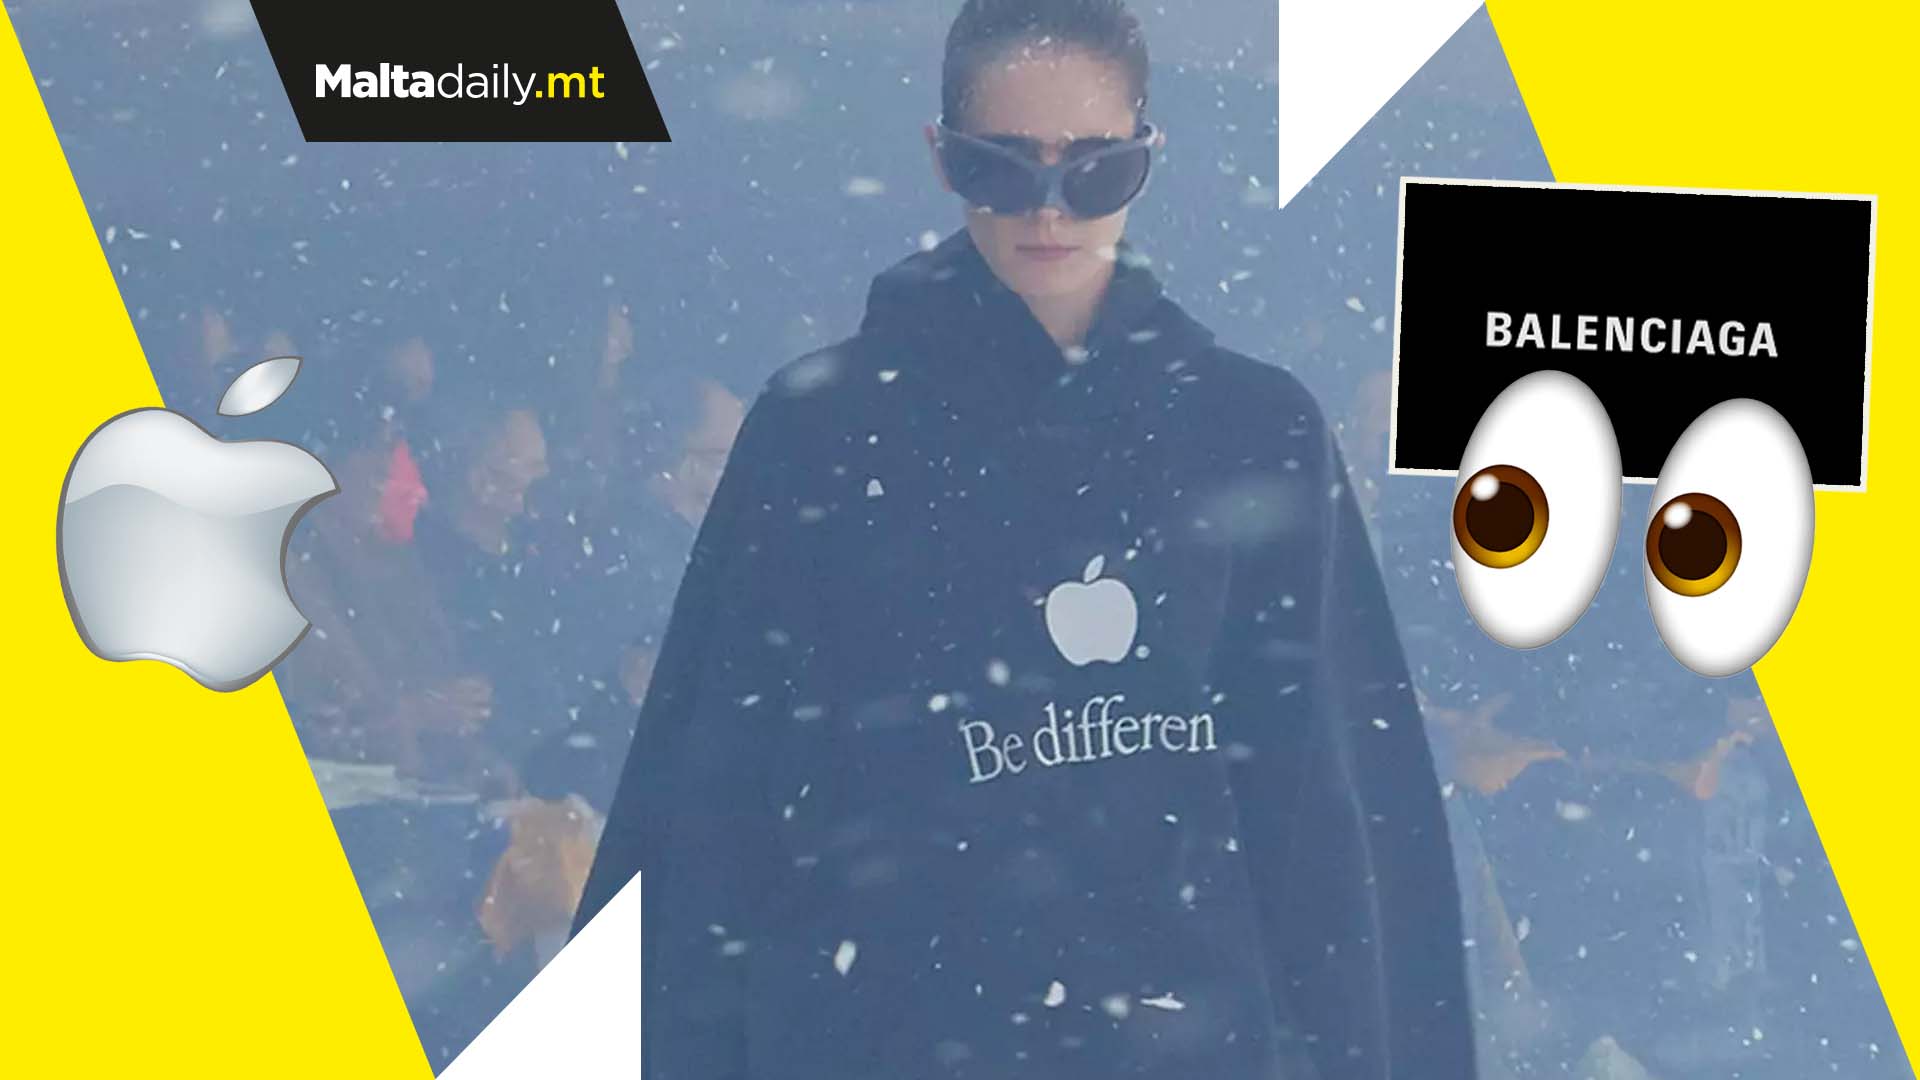 Are Balenciaga and Apple officially collaborating?